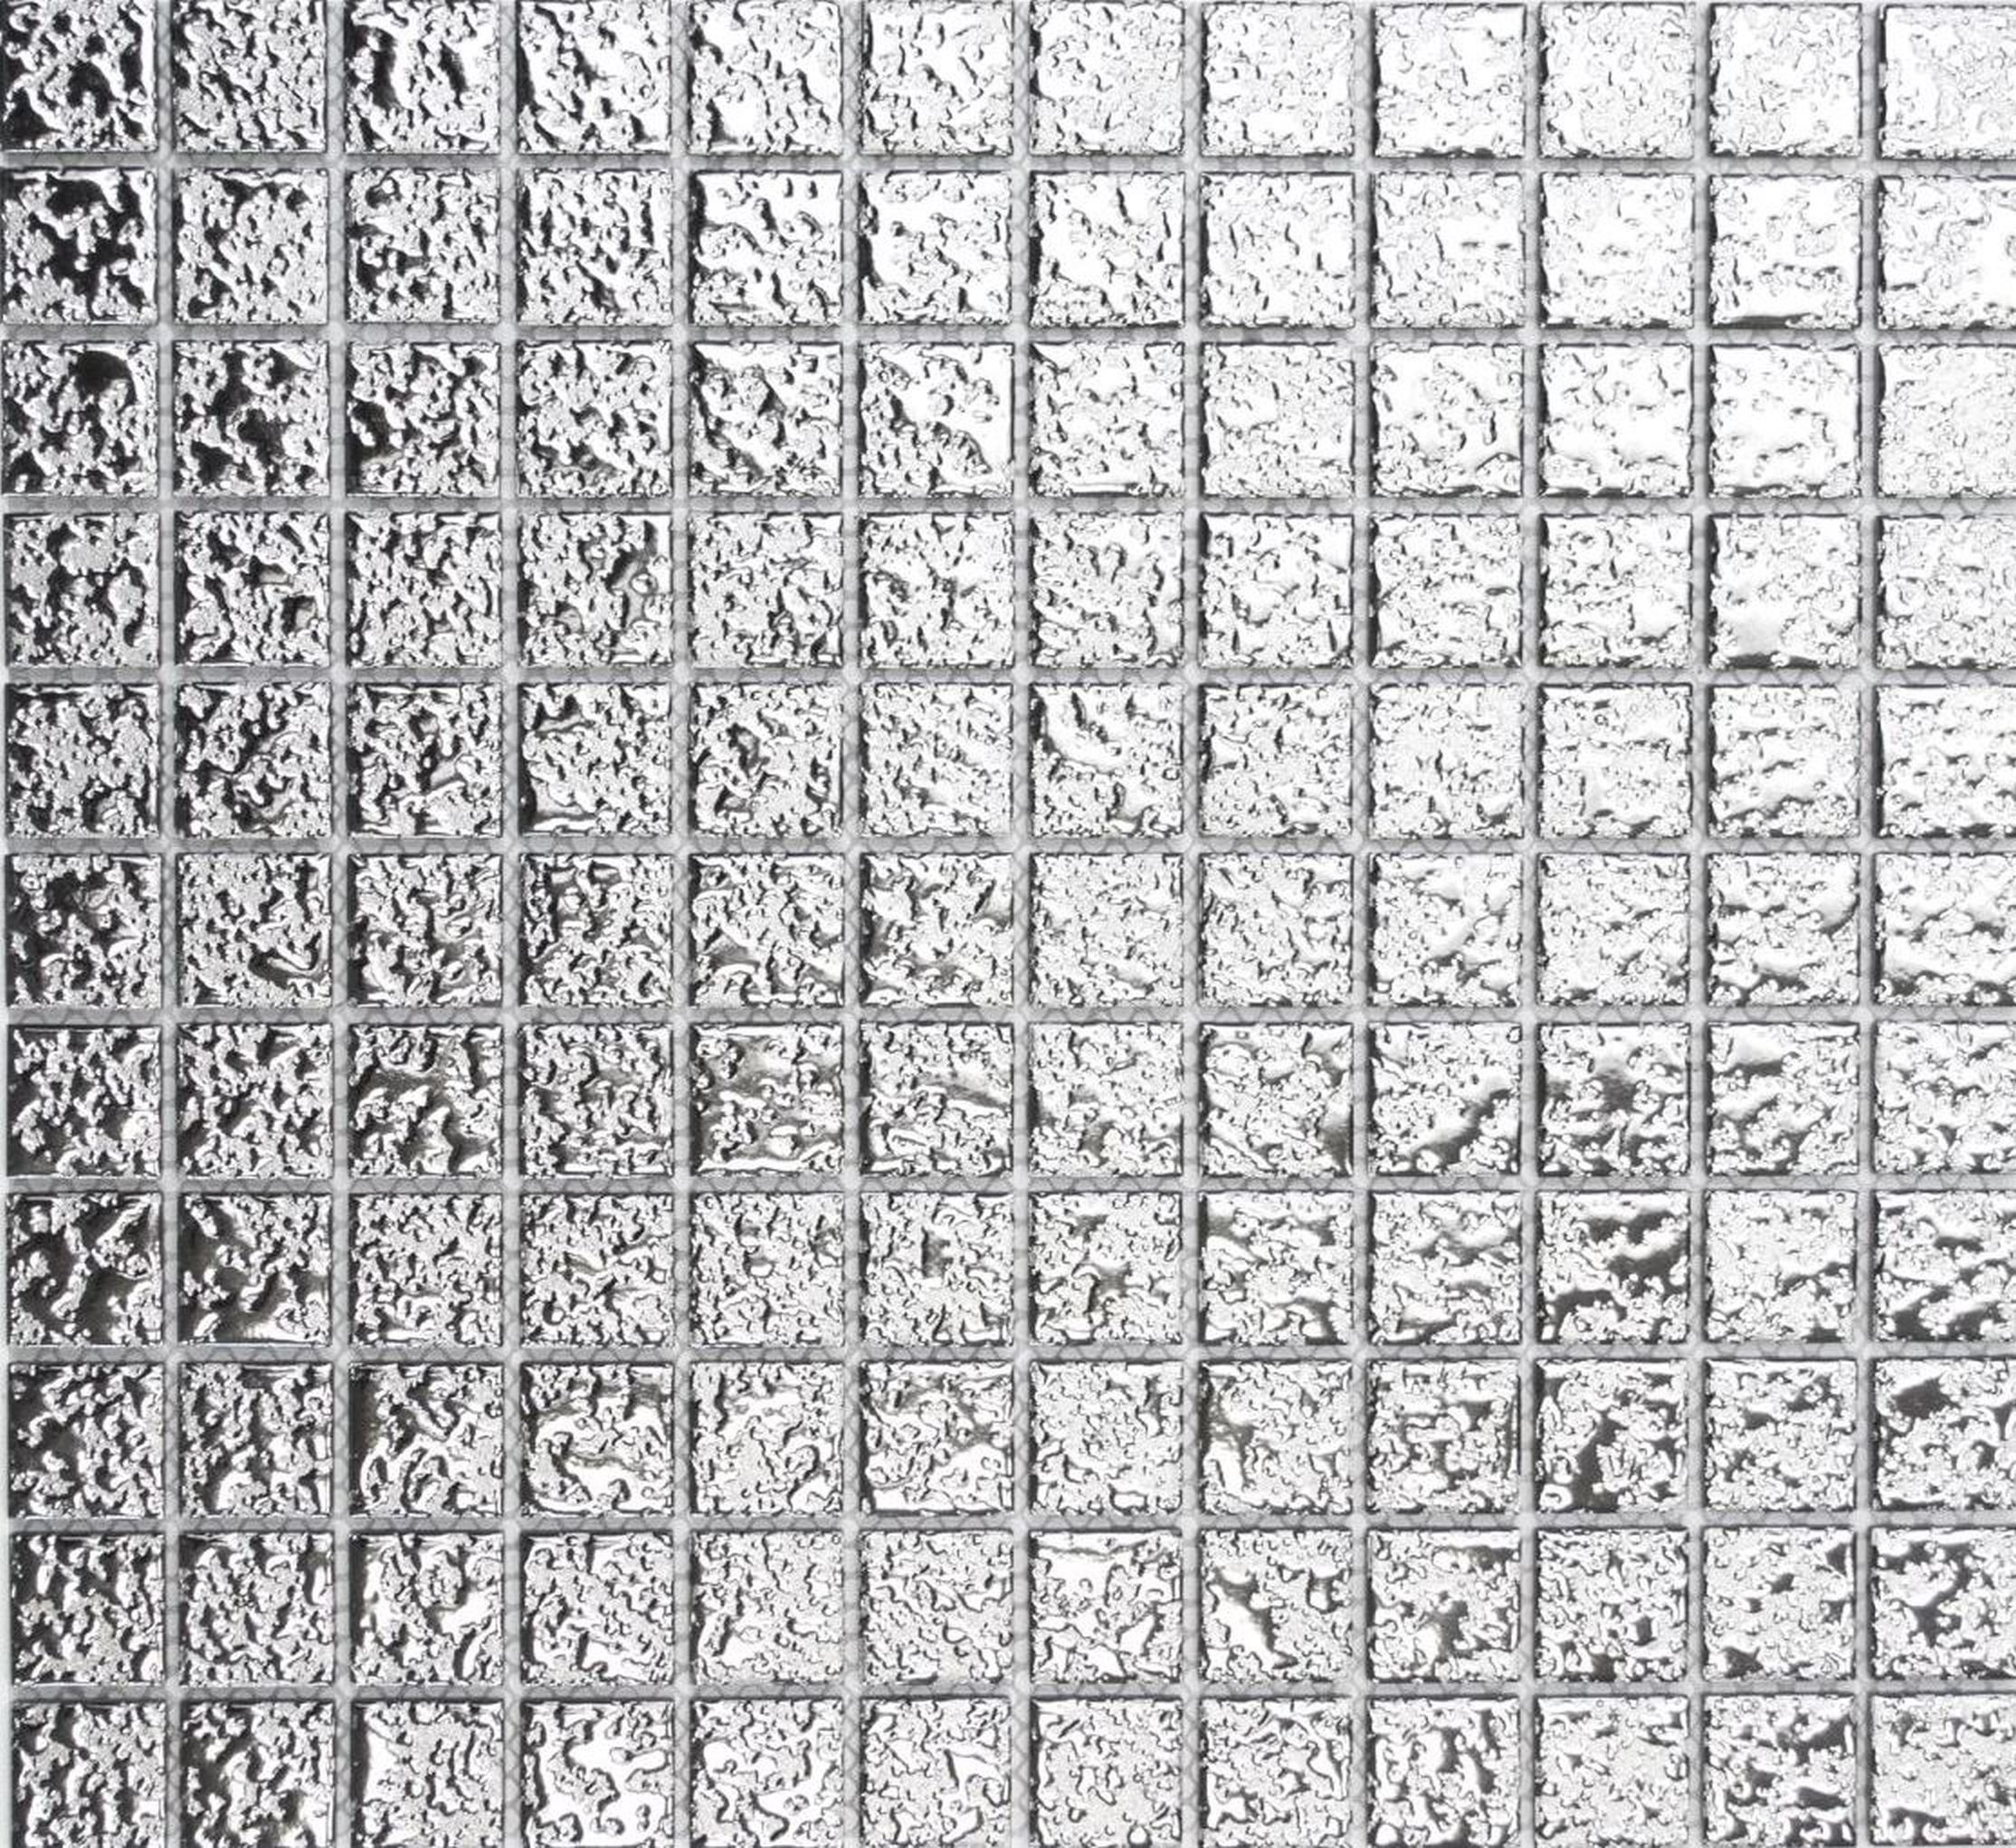 Mosani Mosaikfliesen Keramikmosaik Mosaikfliesen struktur Wand SILBER Küche